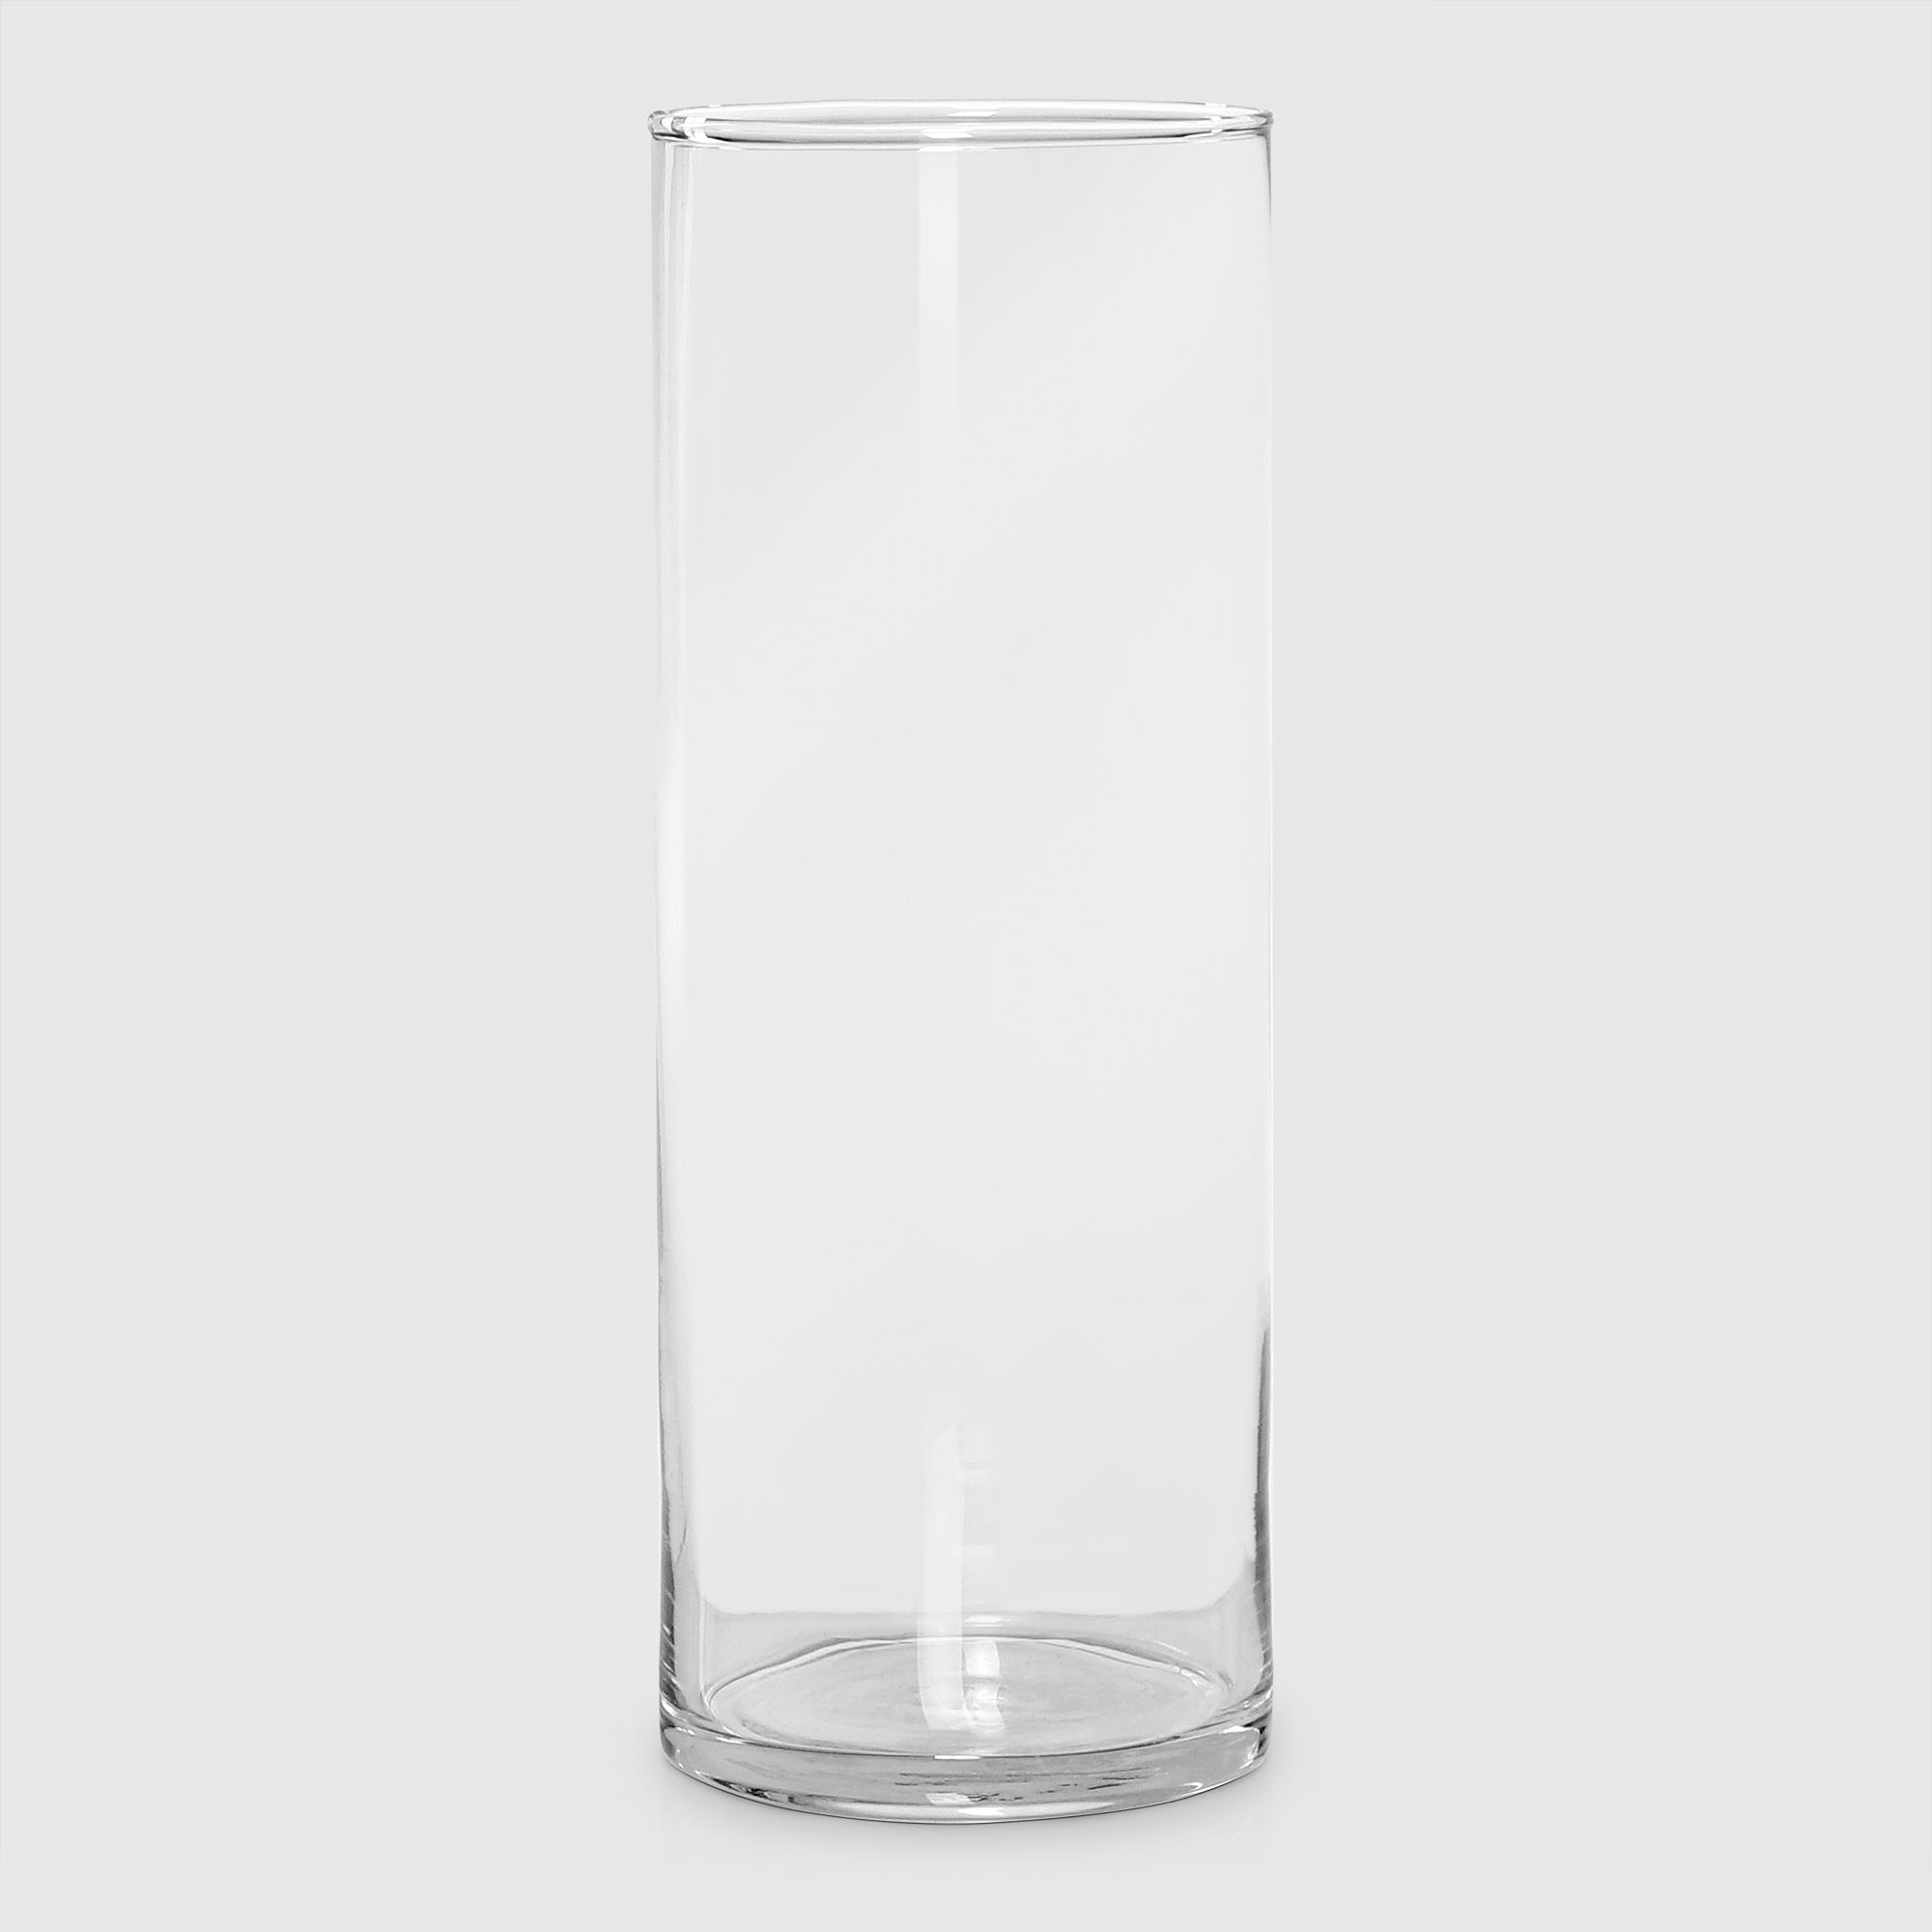 Ваза Hakbijl glass cylinder д9см 24см